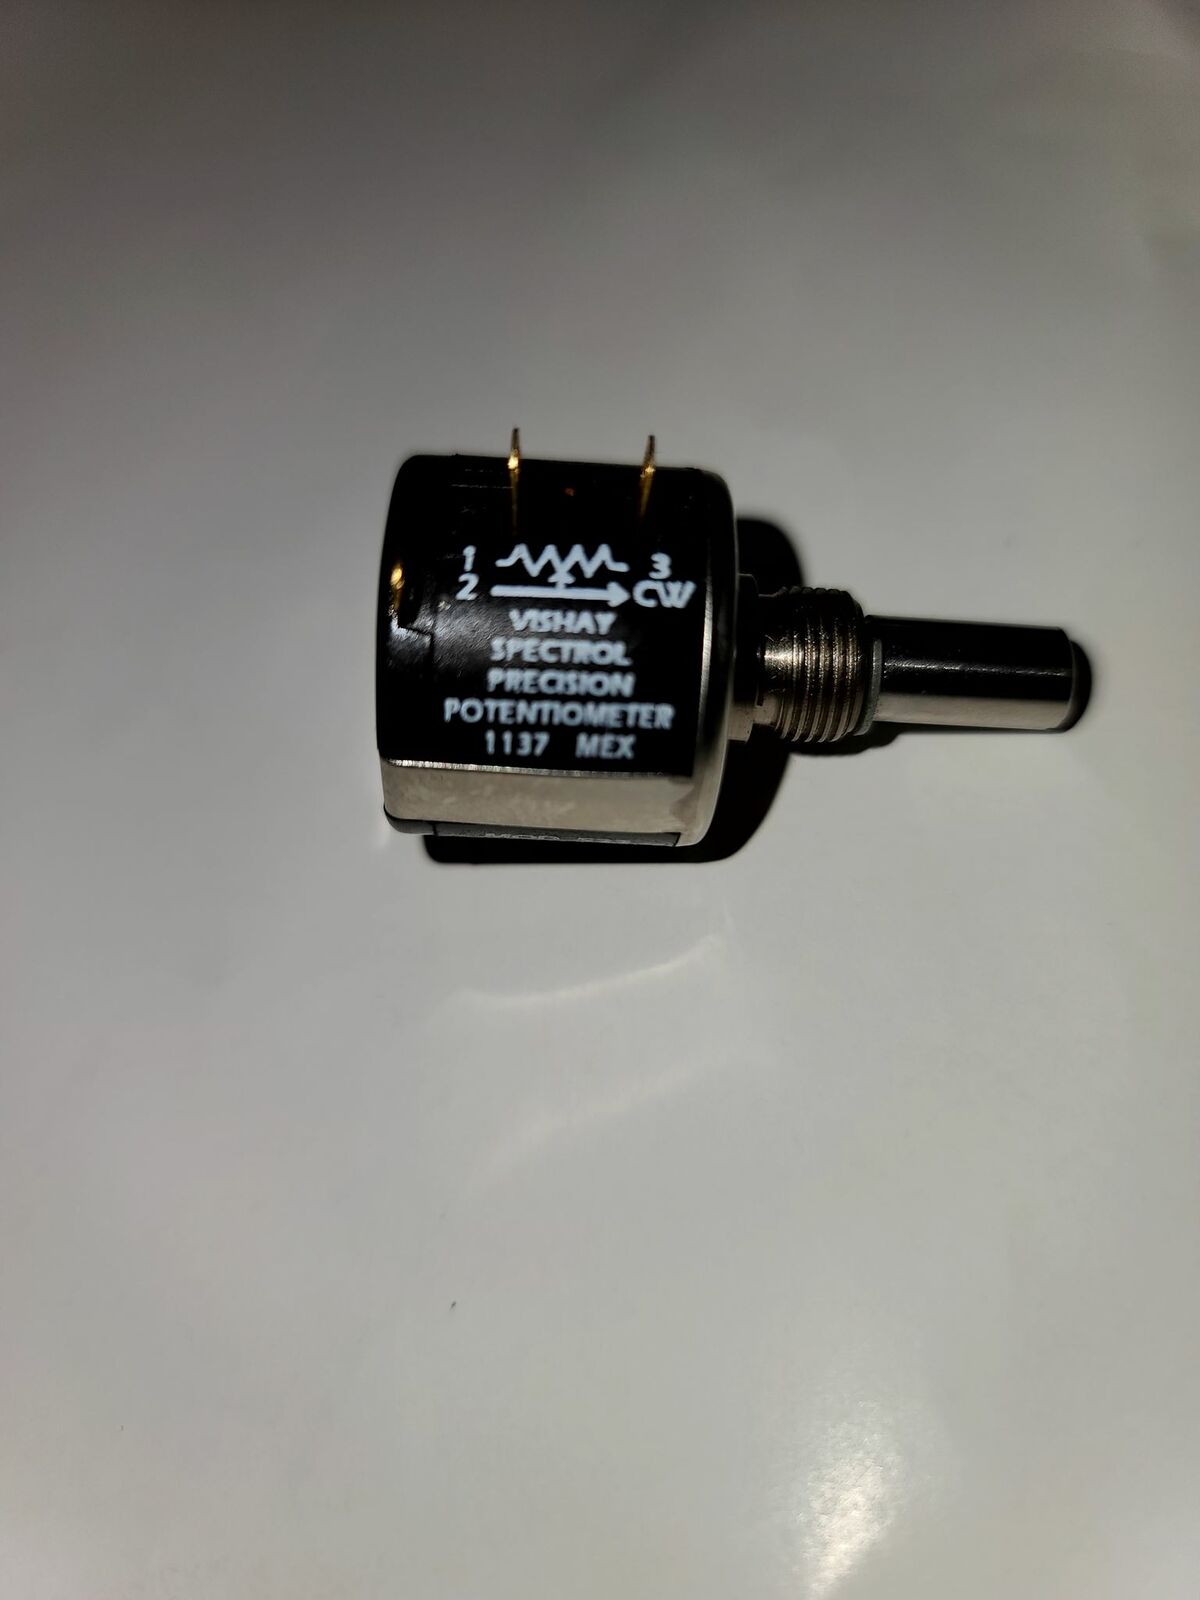 Vishay Spectrol Precision Potentiometer Model 535